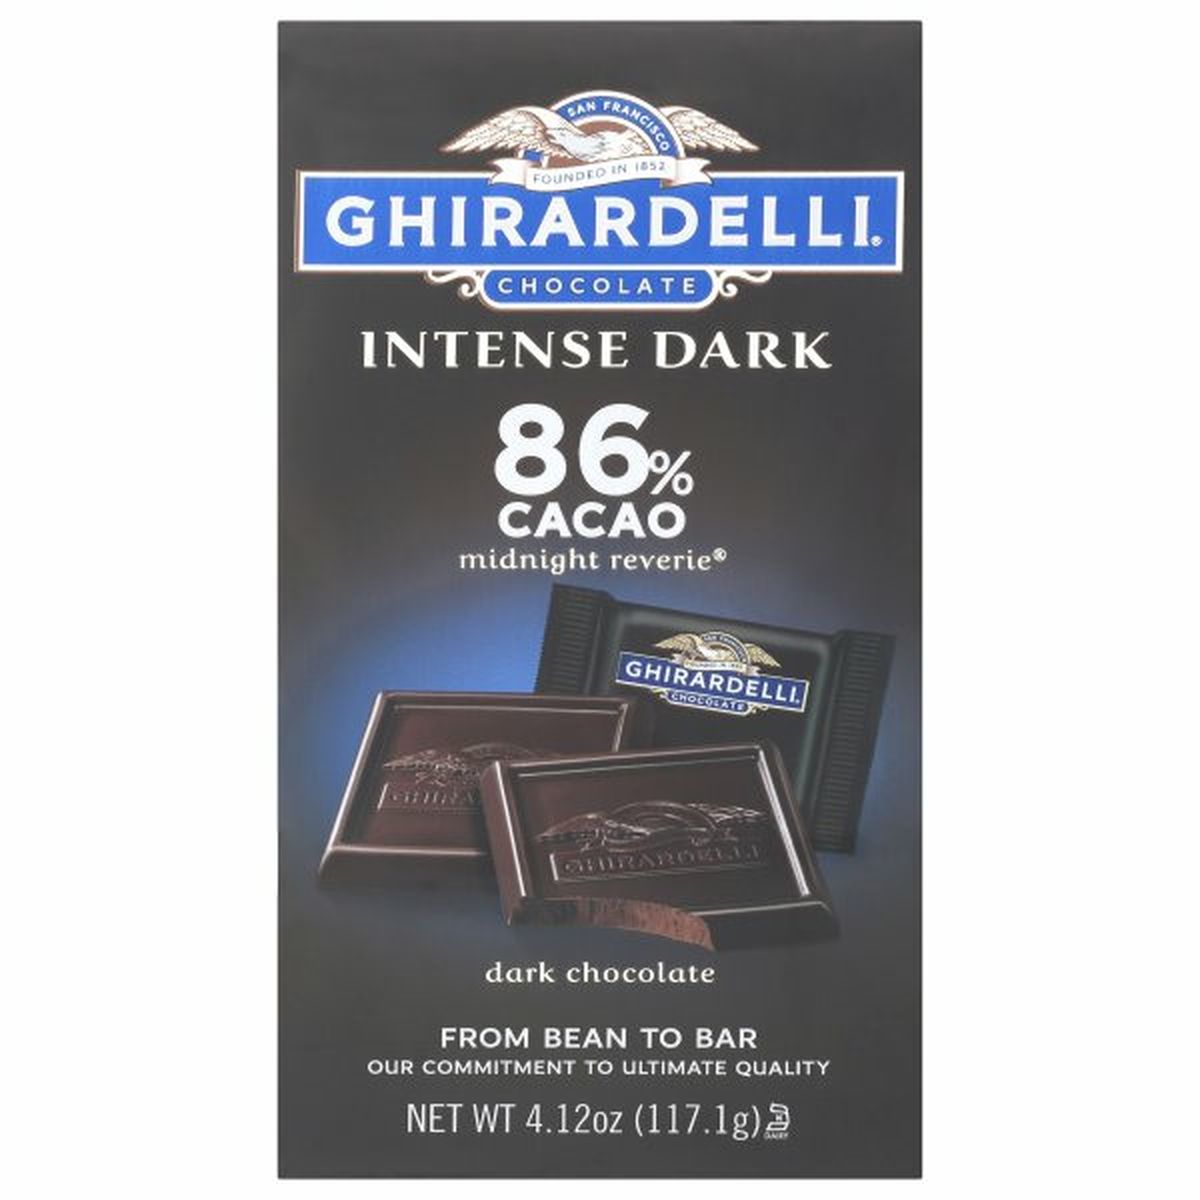 Calories in Ghirardelli Dark Chocolate, Intense, Midnight Reverie, 86% Cacao